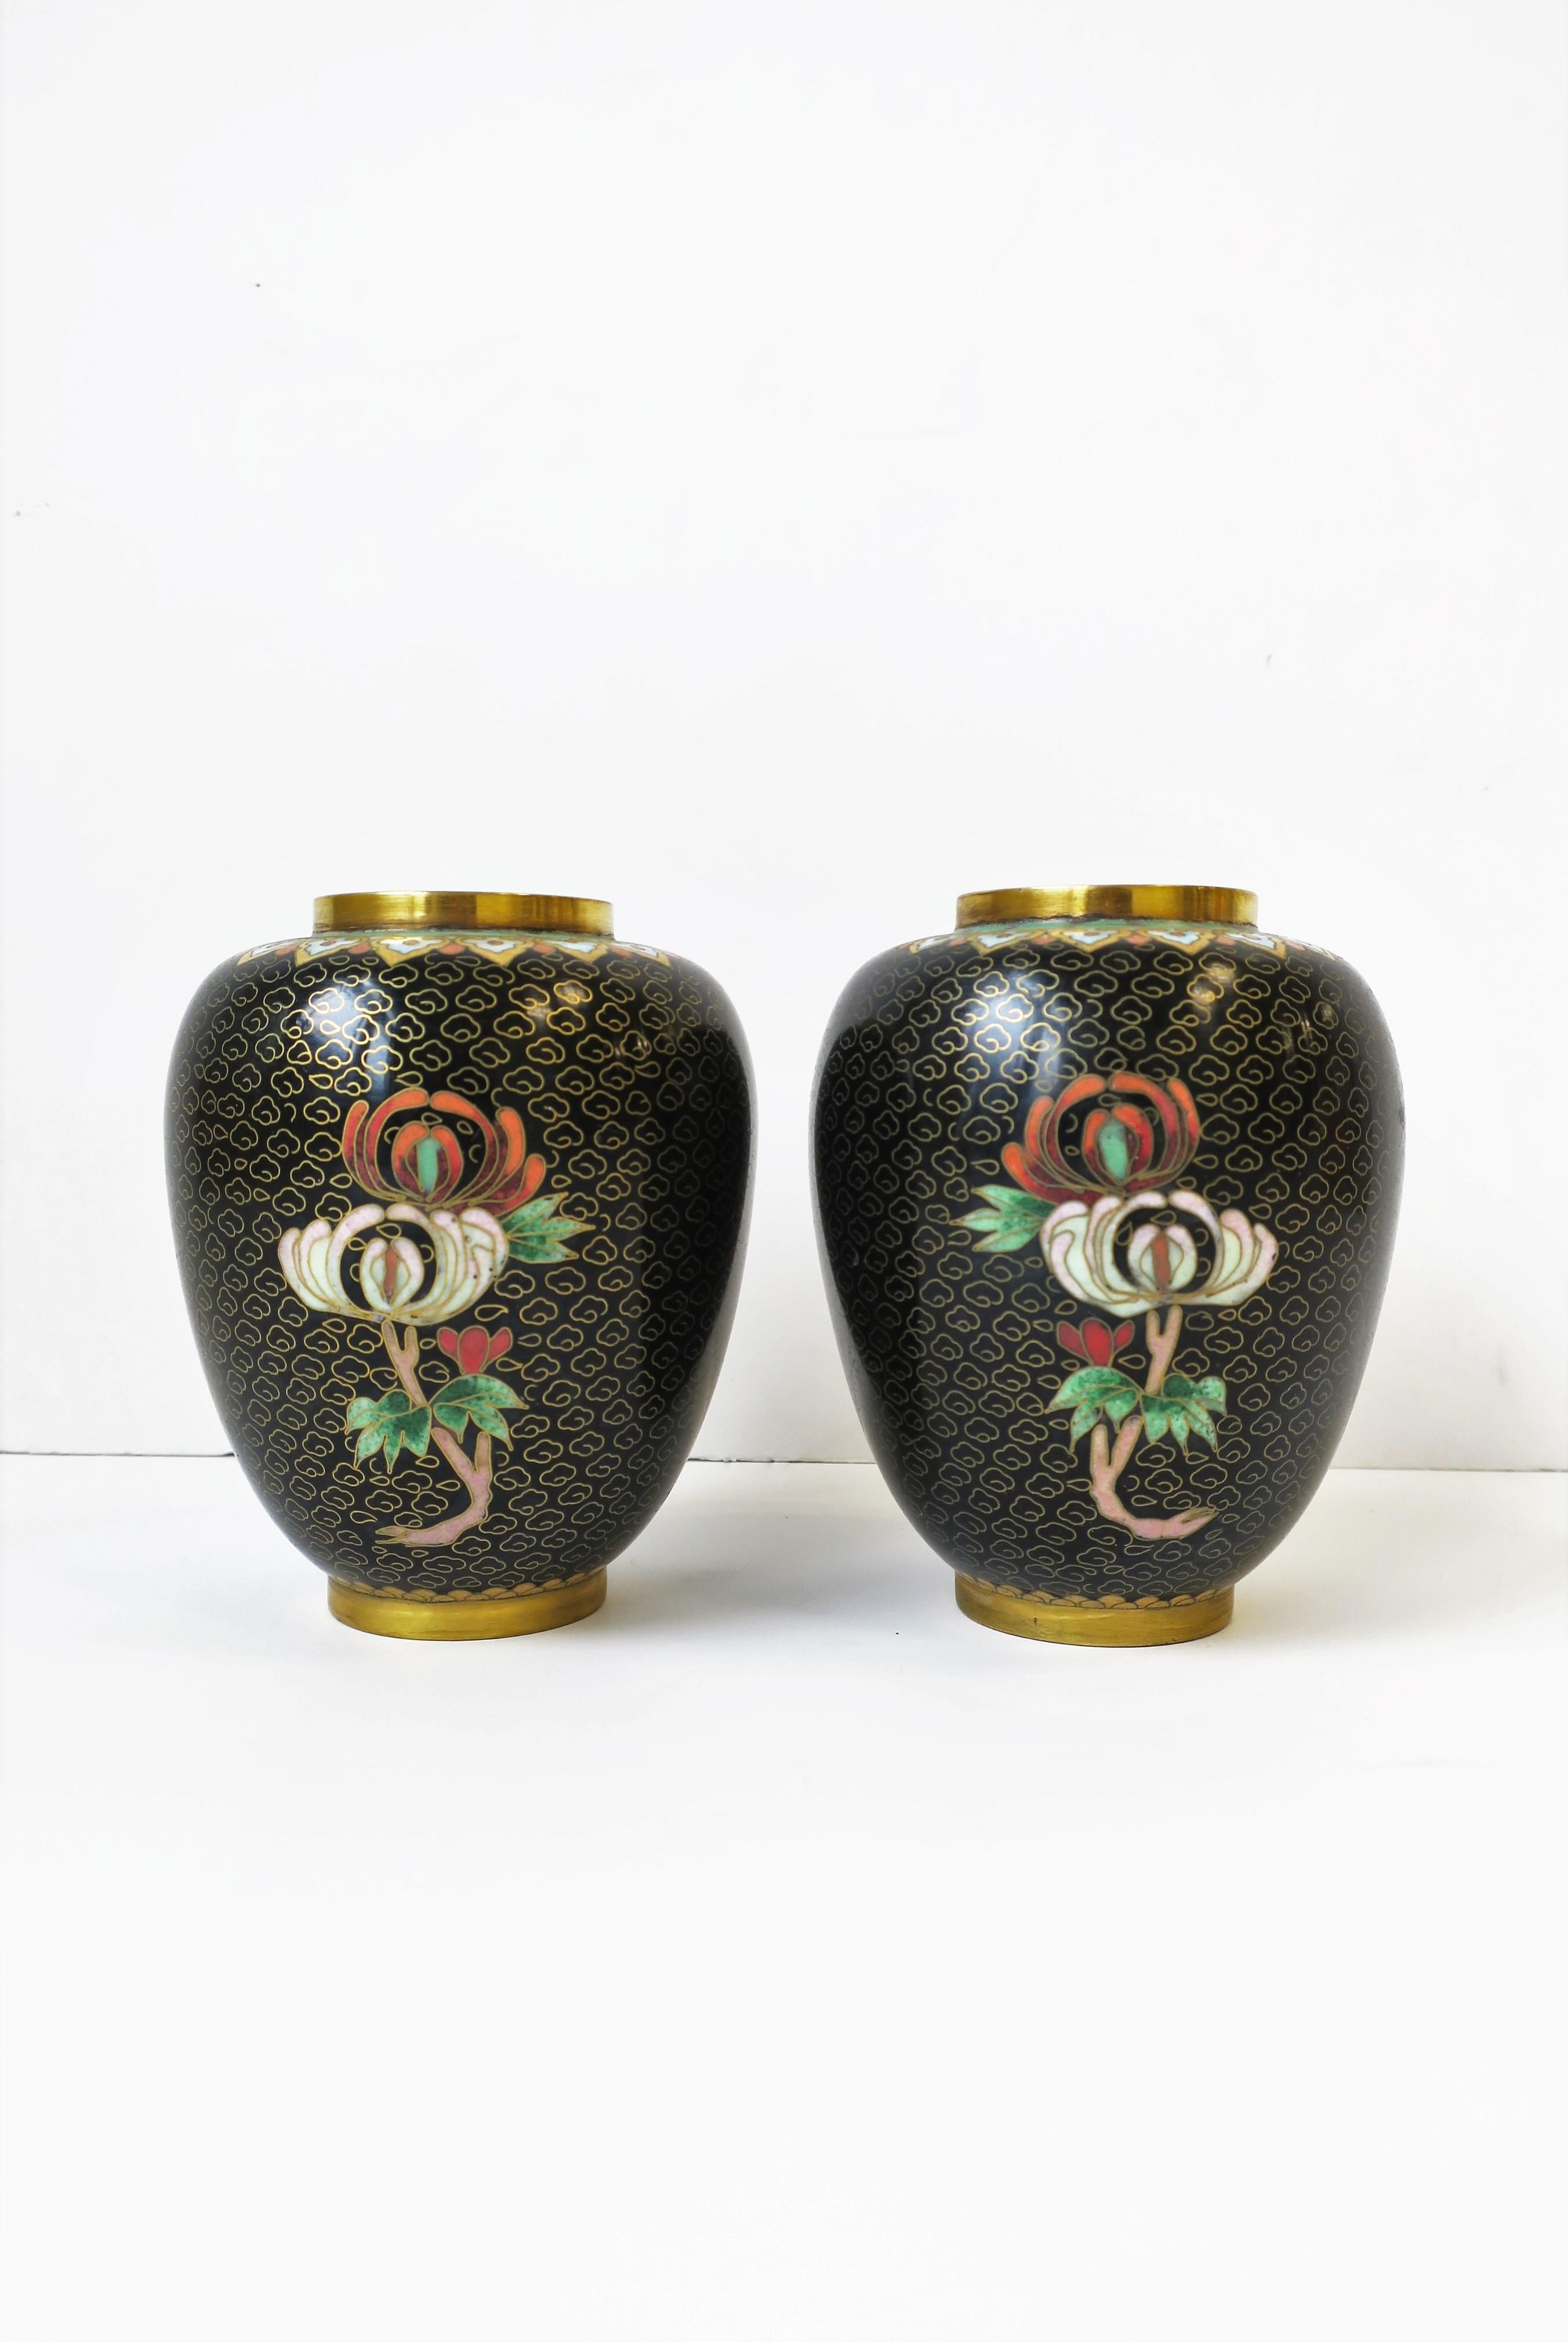 Cloisonné́ Enamel and Brass Flower Vases Black Gold and Pastel Colors, Pair For Sale 1